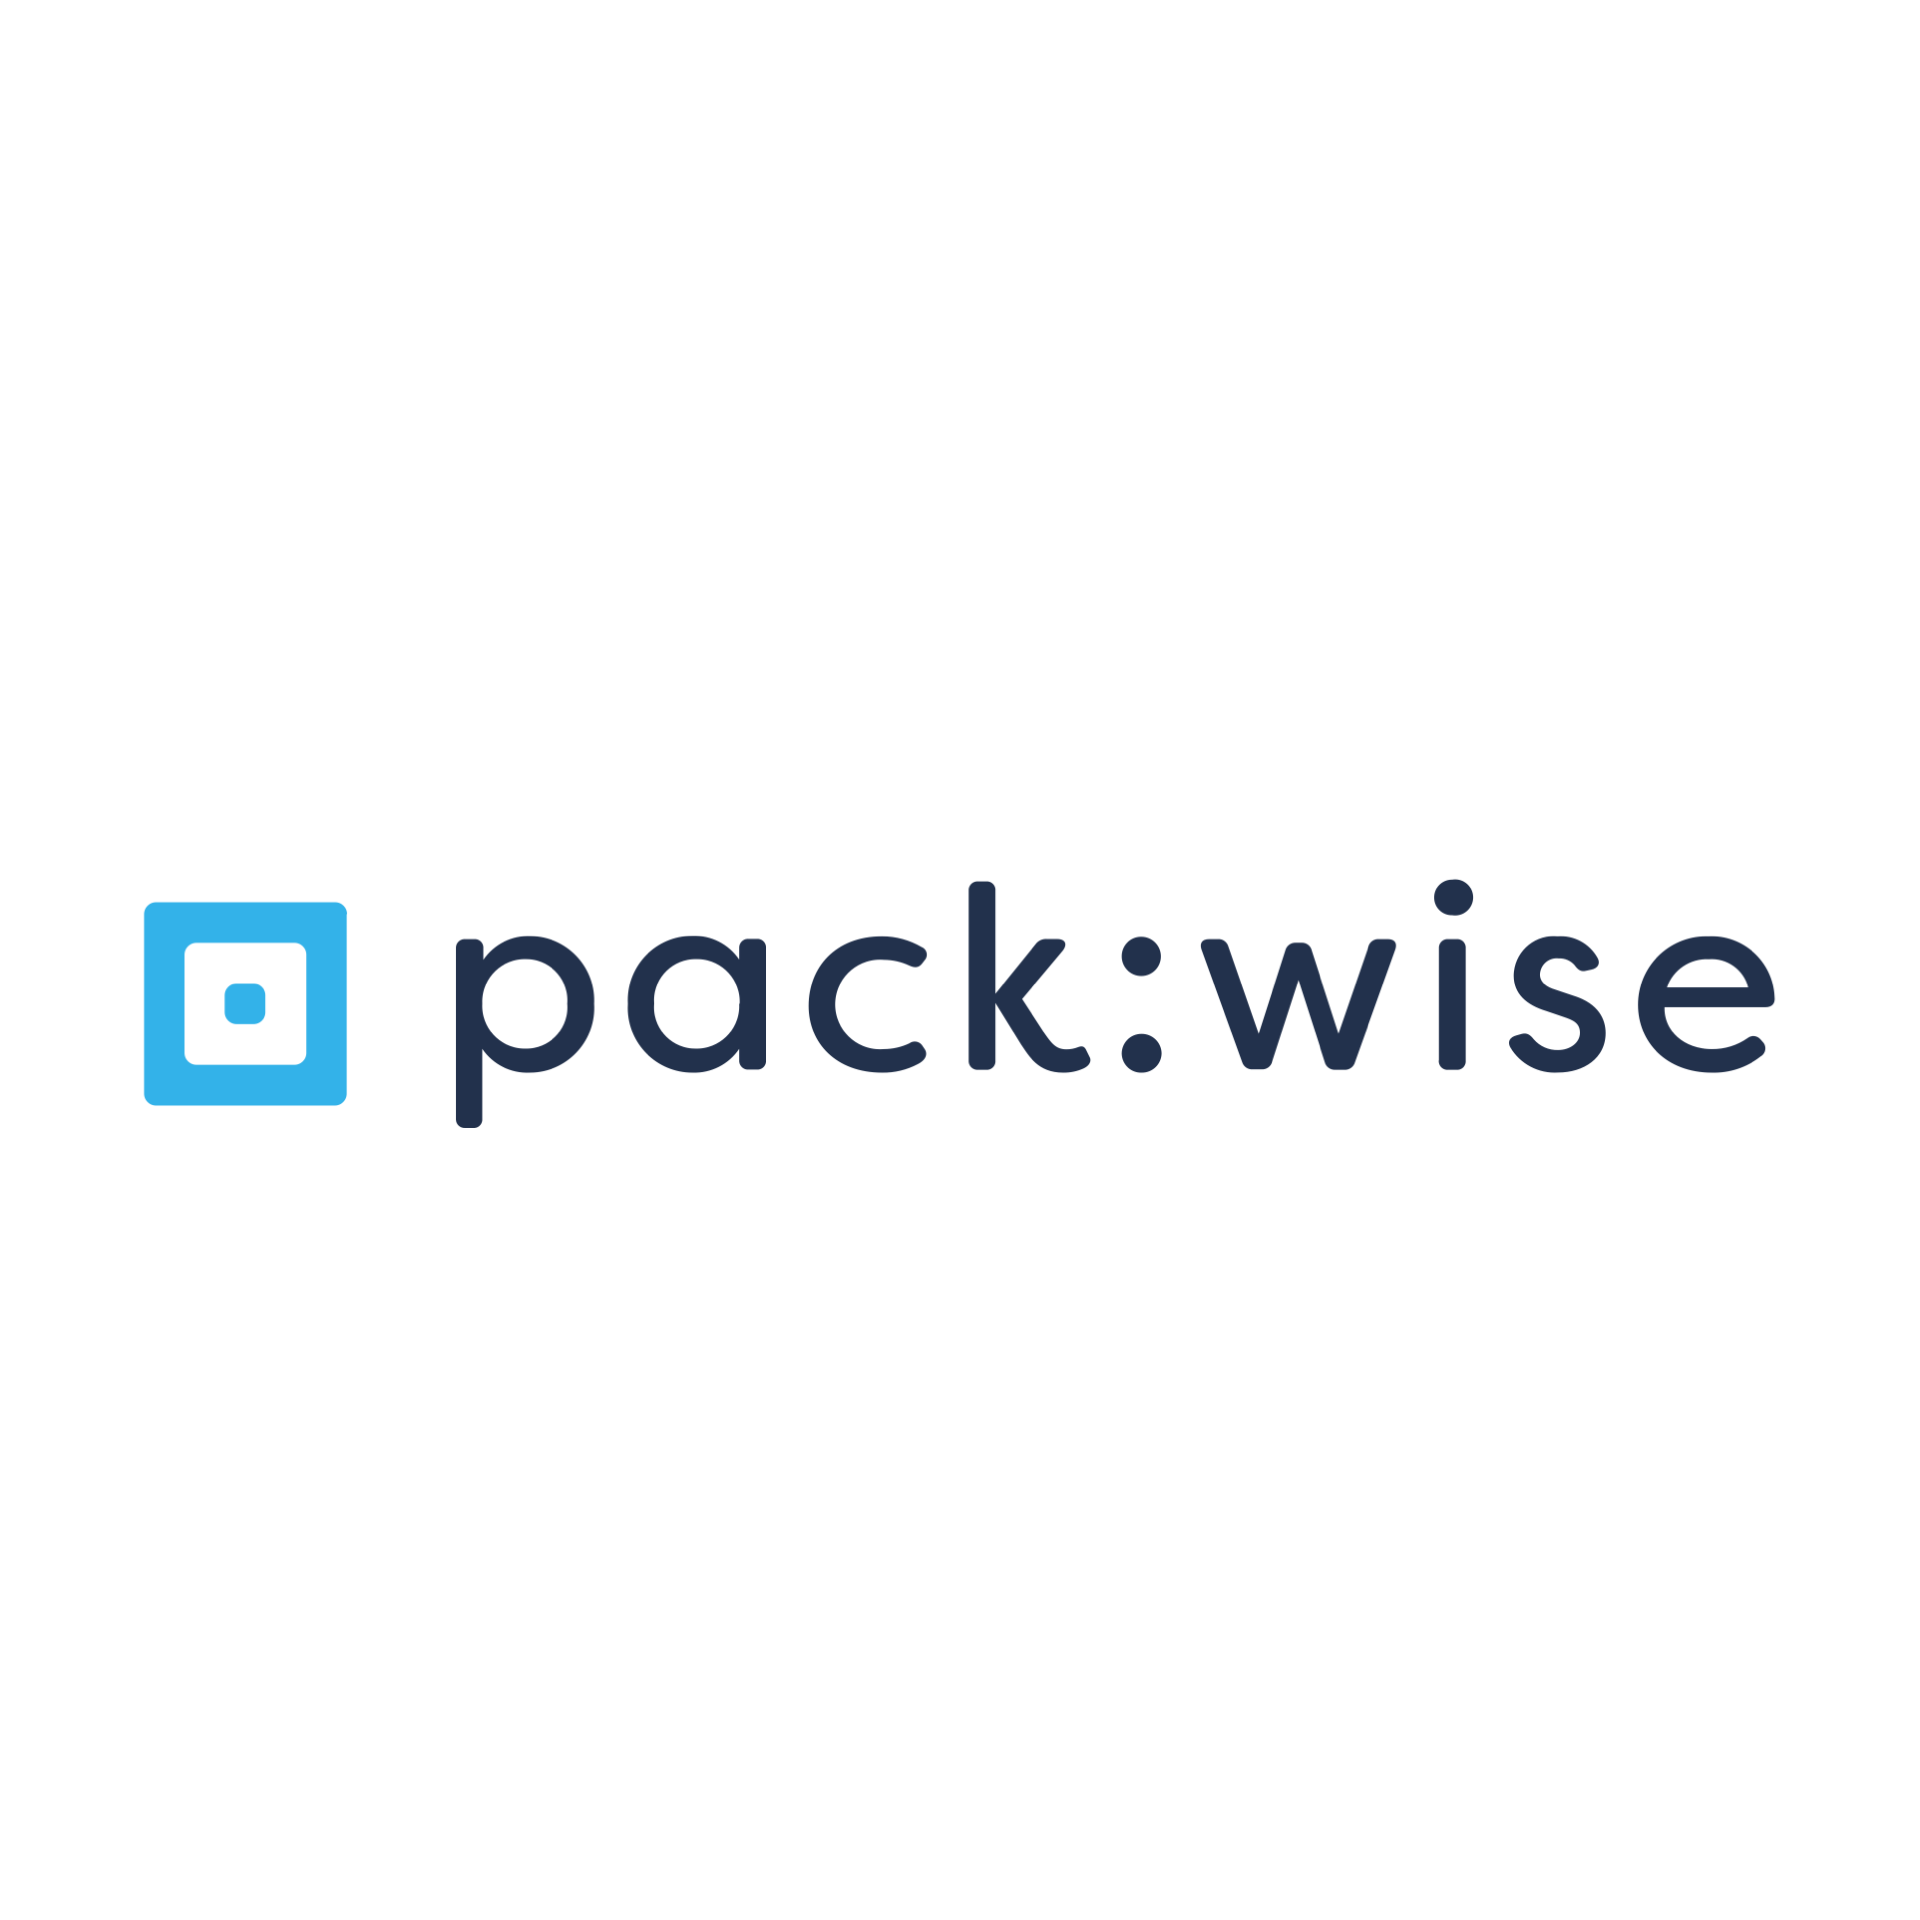 Packwise